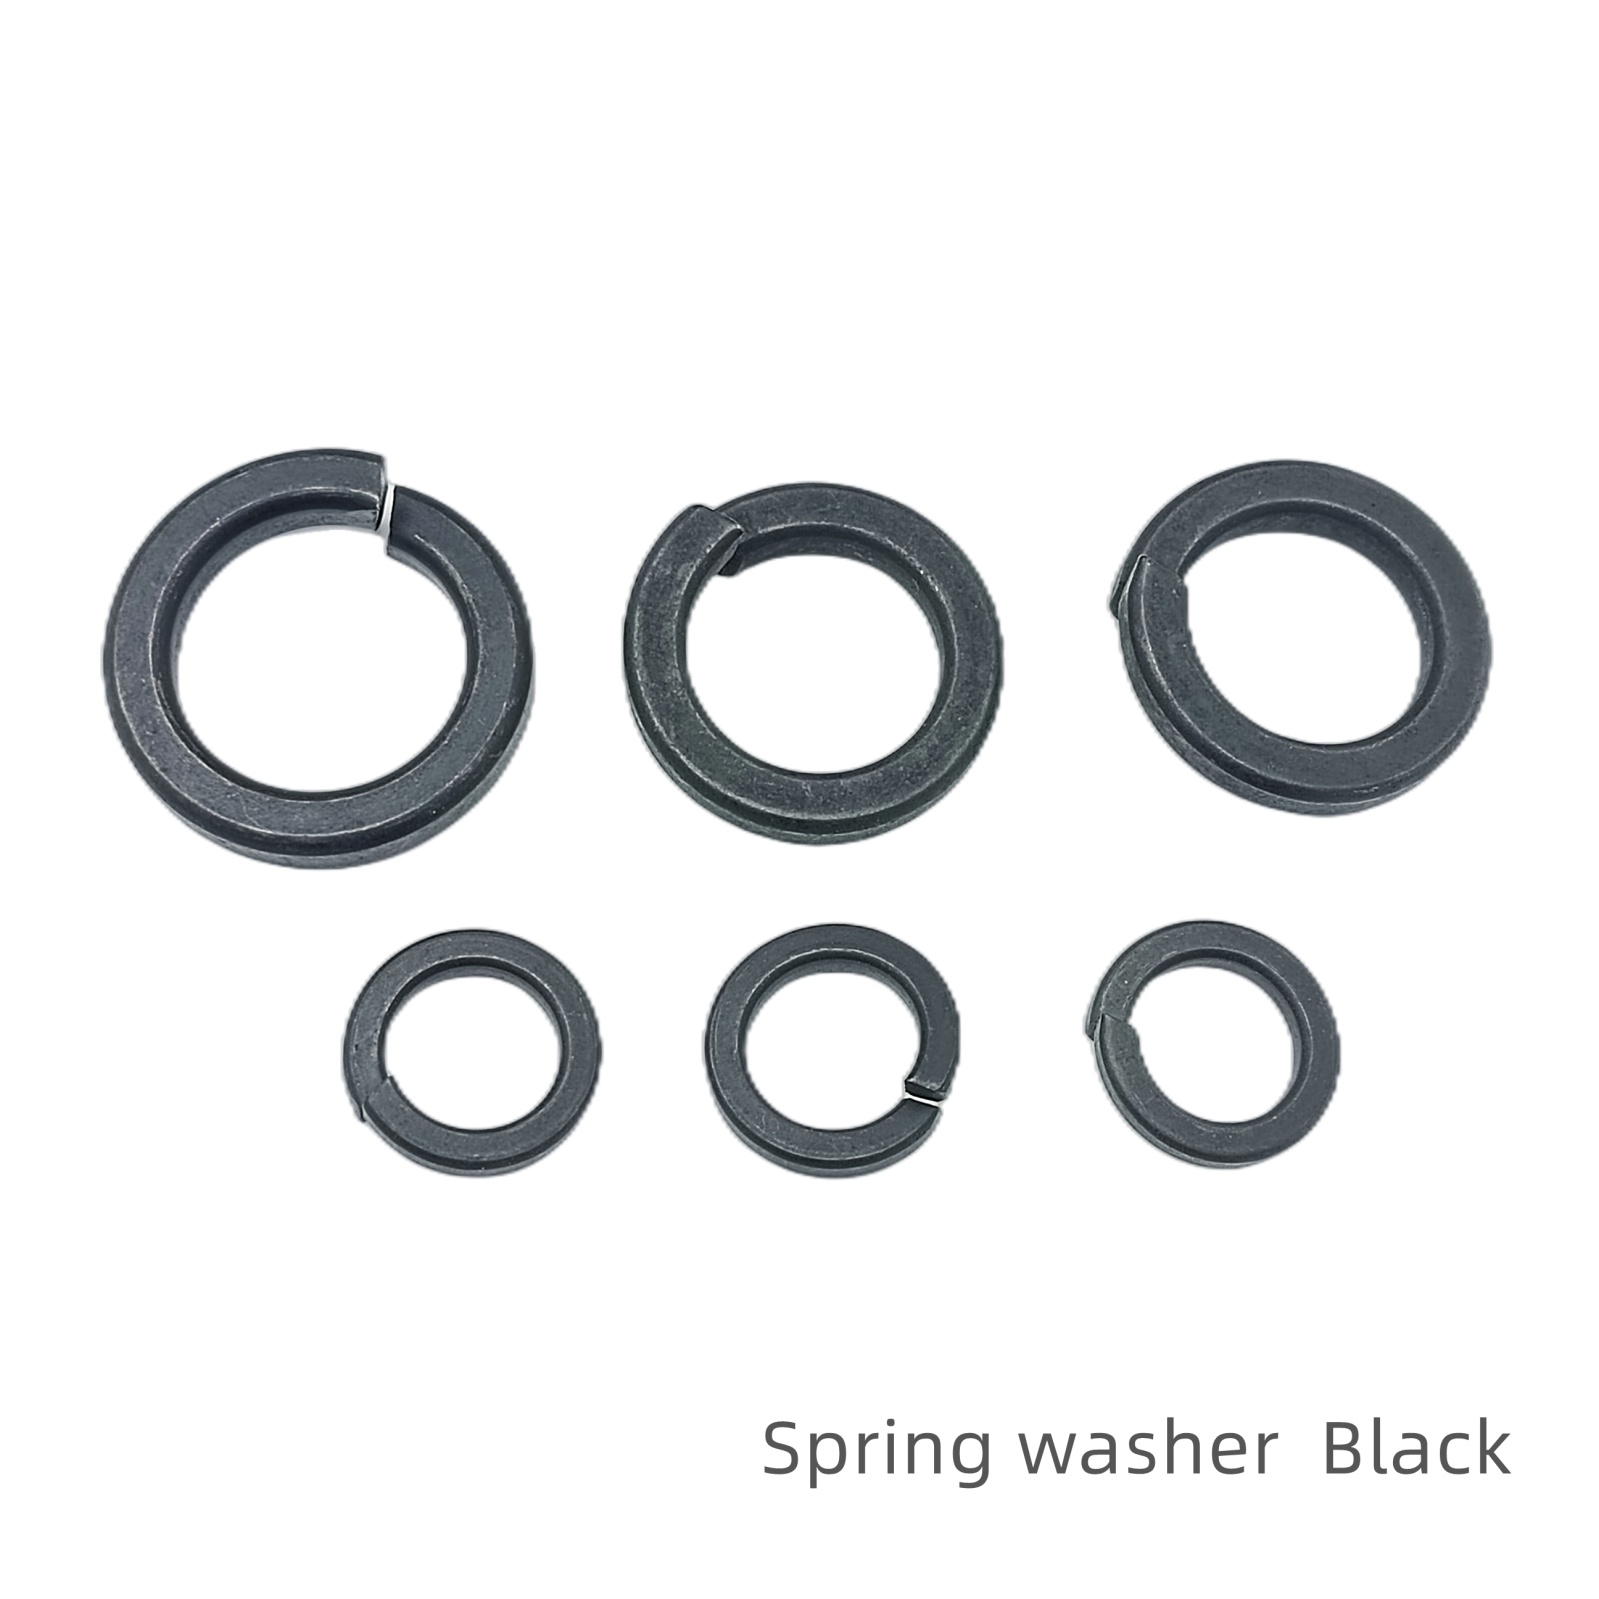 Flat washer spring washer Zn galvanized black